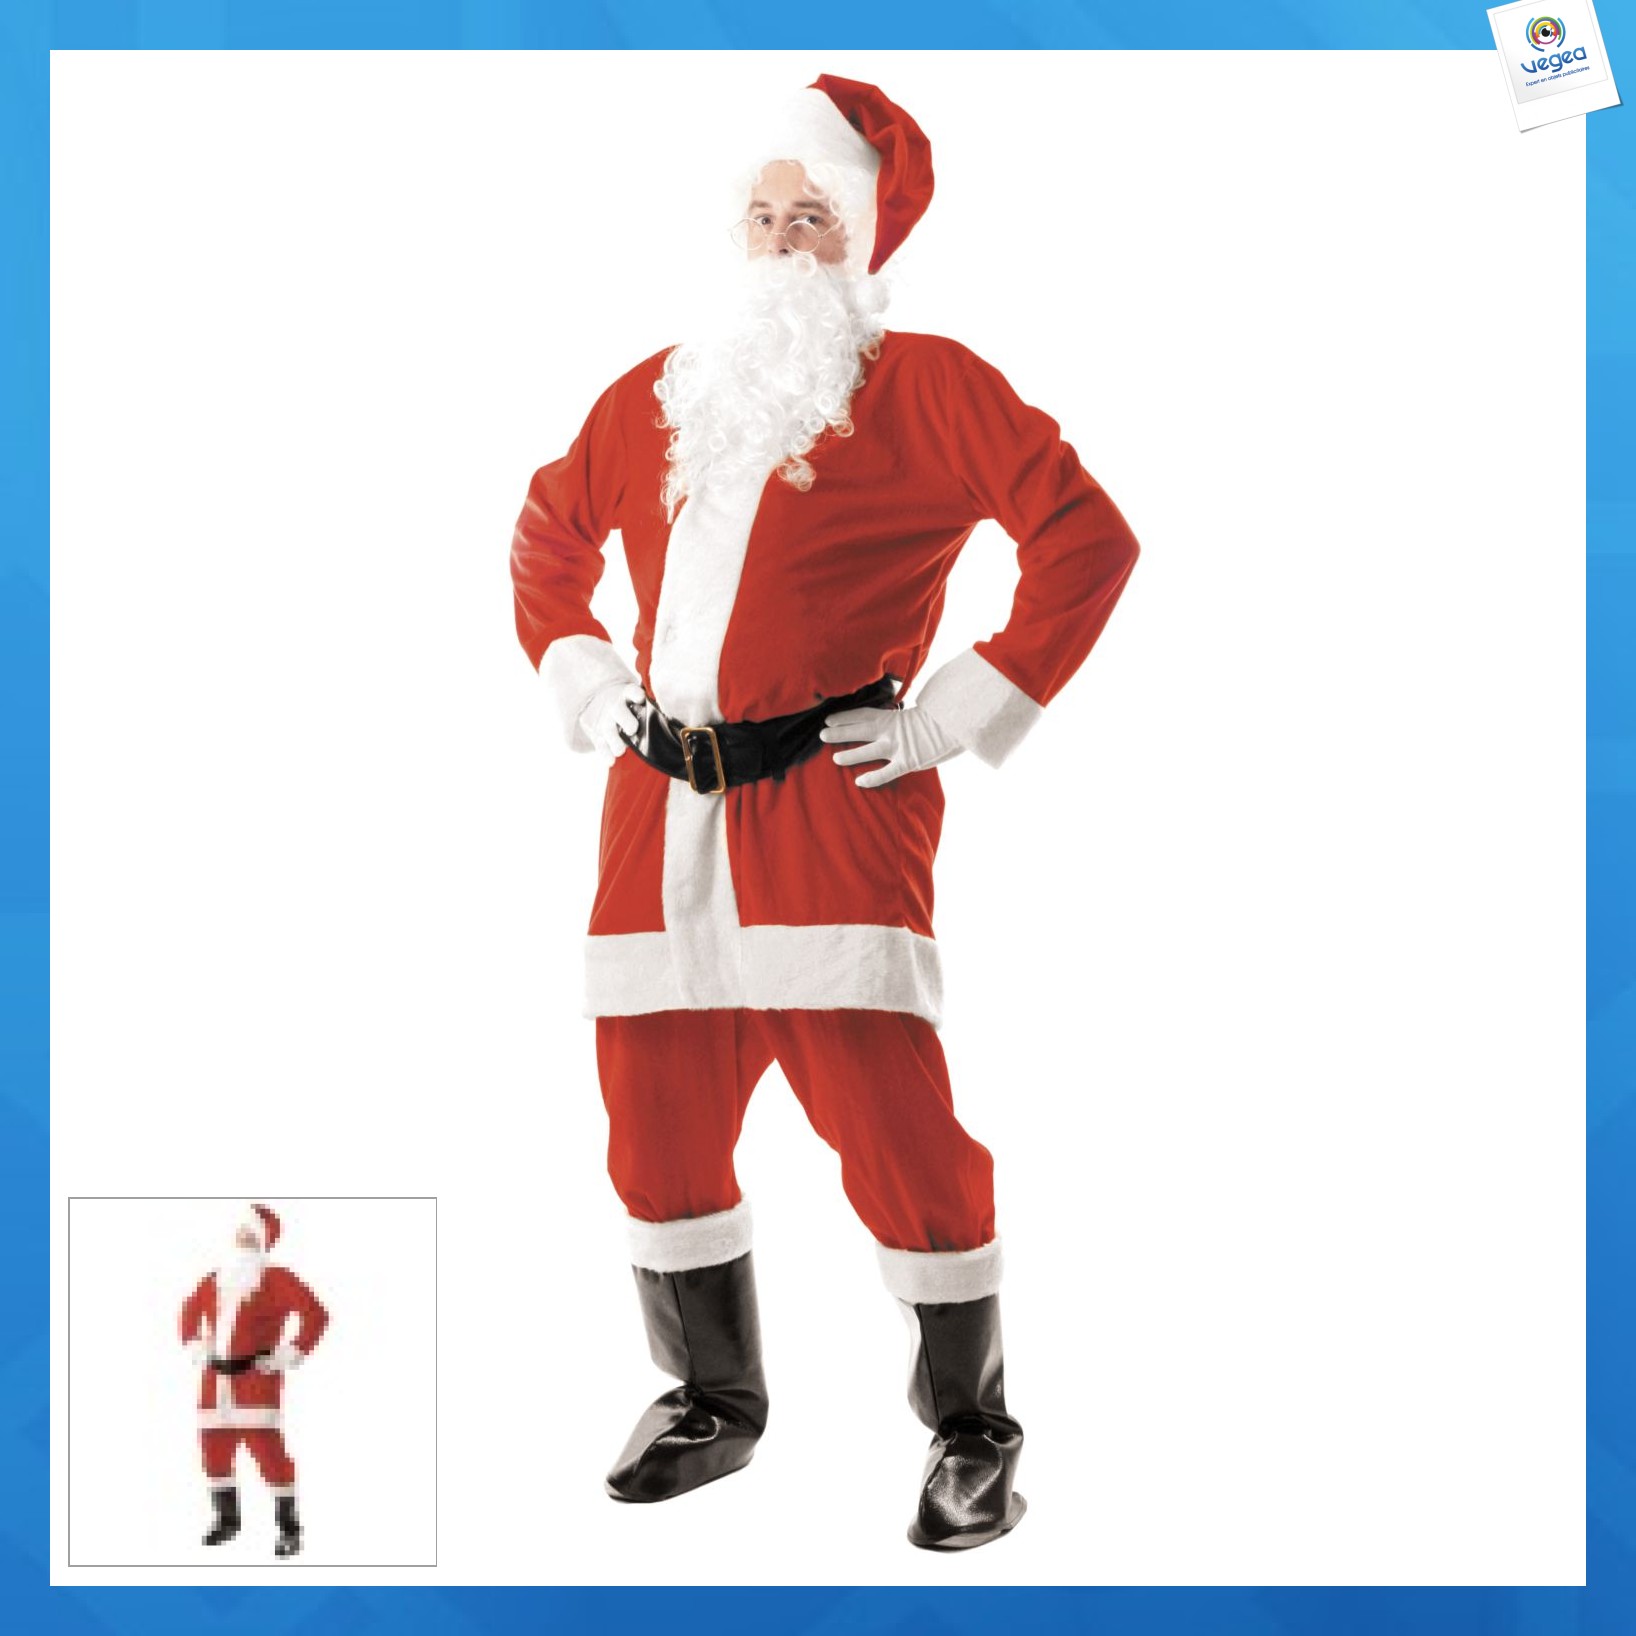 Santa Claus Costume, Father Christmas Costume, Costume Ded Moroz, Russian  Santa Claus Costume, New Year Santa Claus Costume, Santa Claus Red - Etsy |  Santa claus costume, Christmas costumes, Costumes